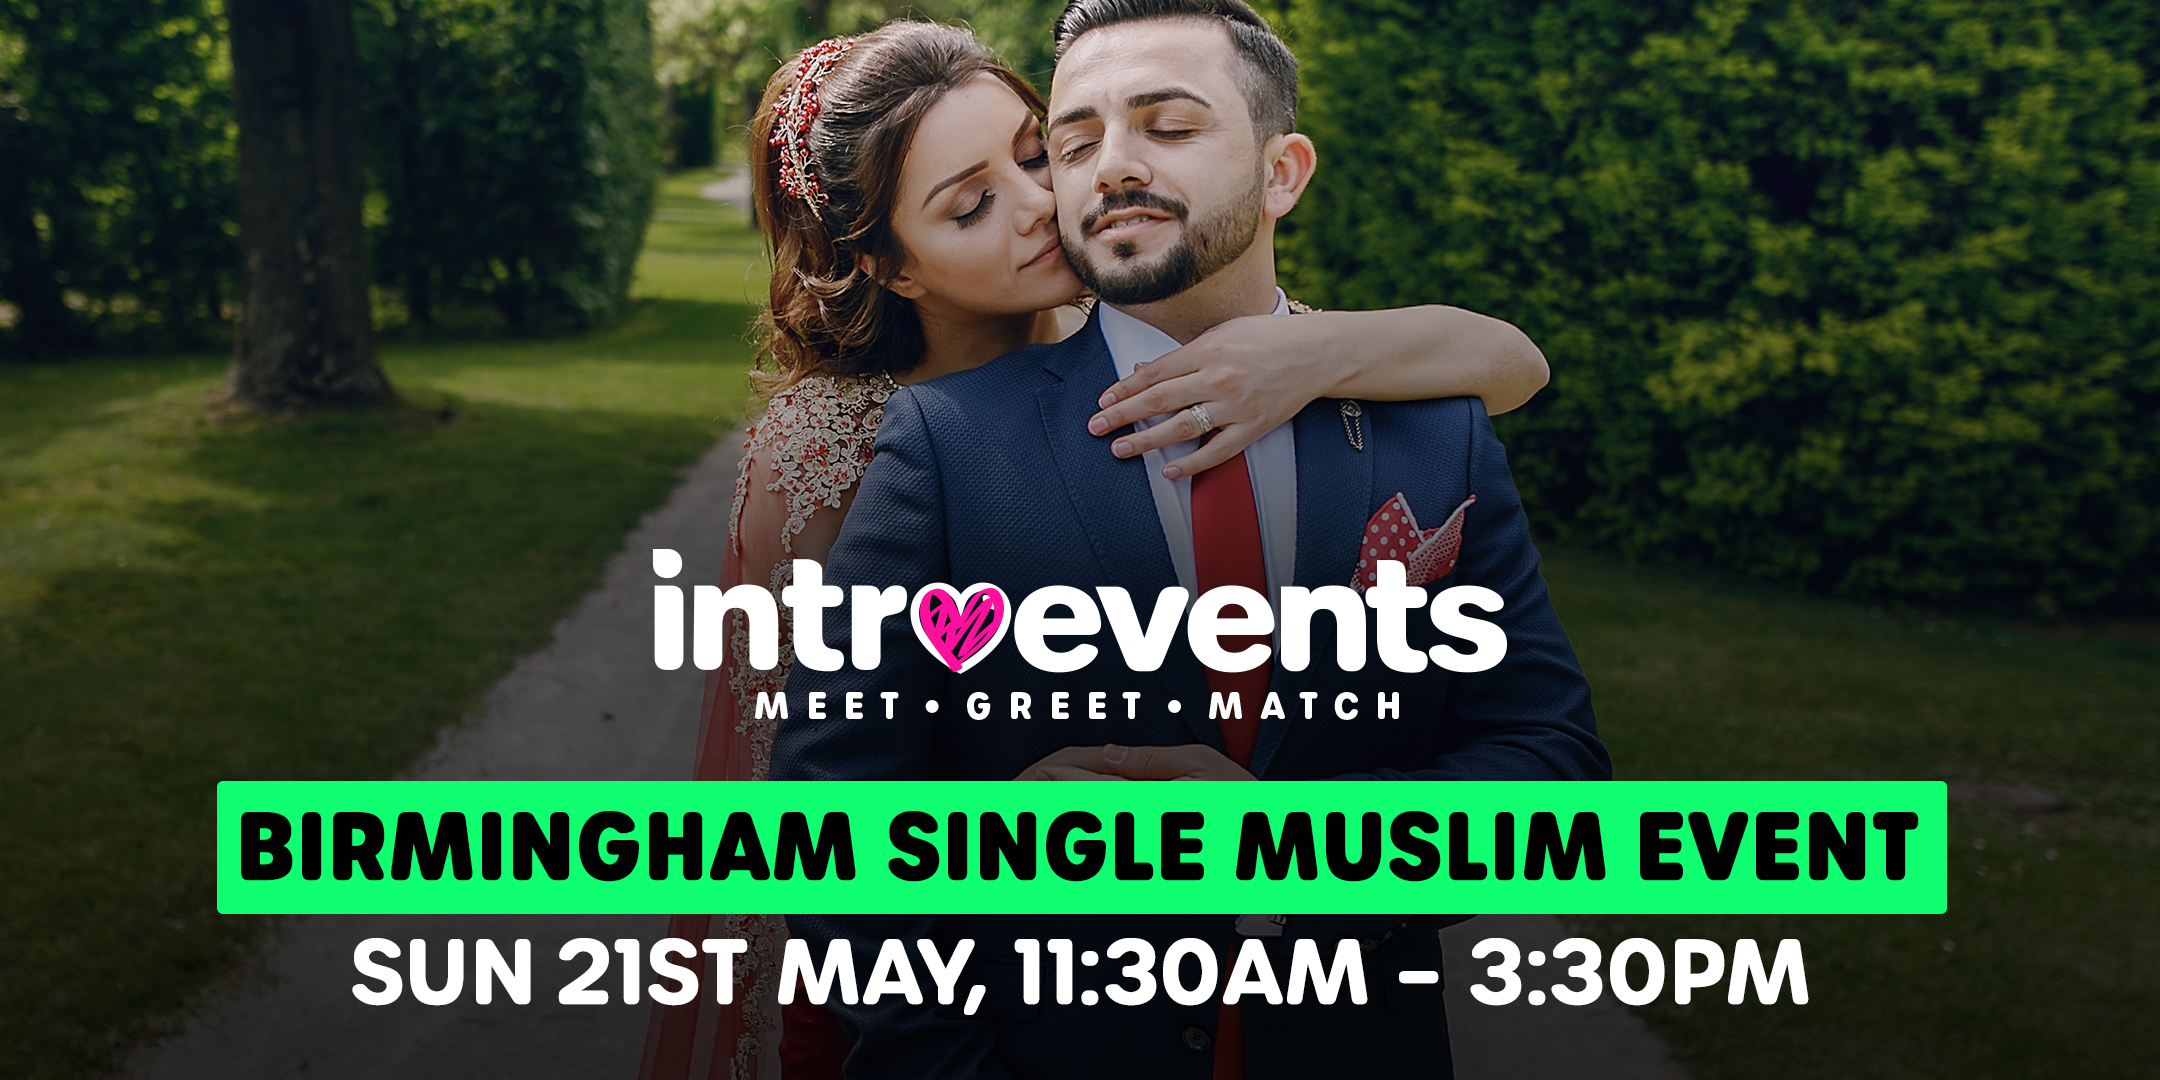 Muslim Marriage Events Birmingham for Ages 21-35., Birmingham, West Midlands, United Kingdom